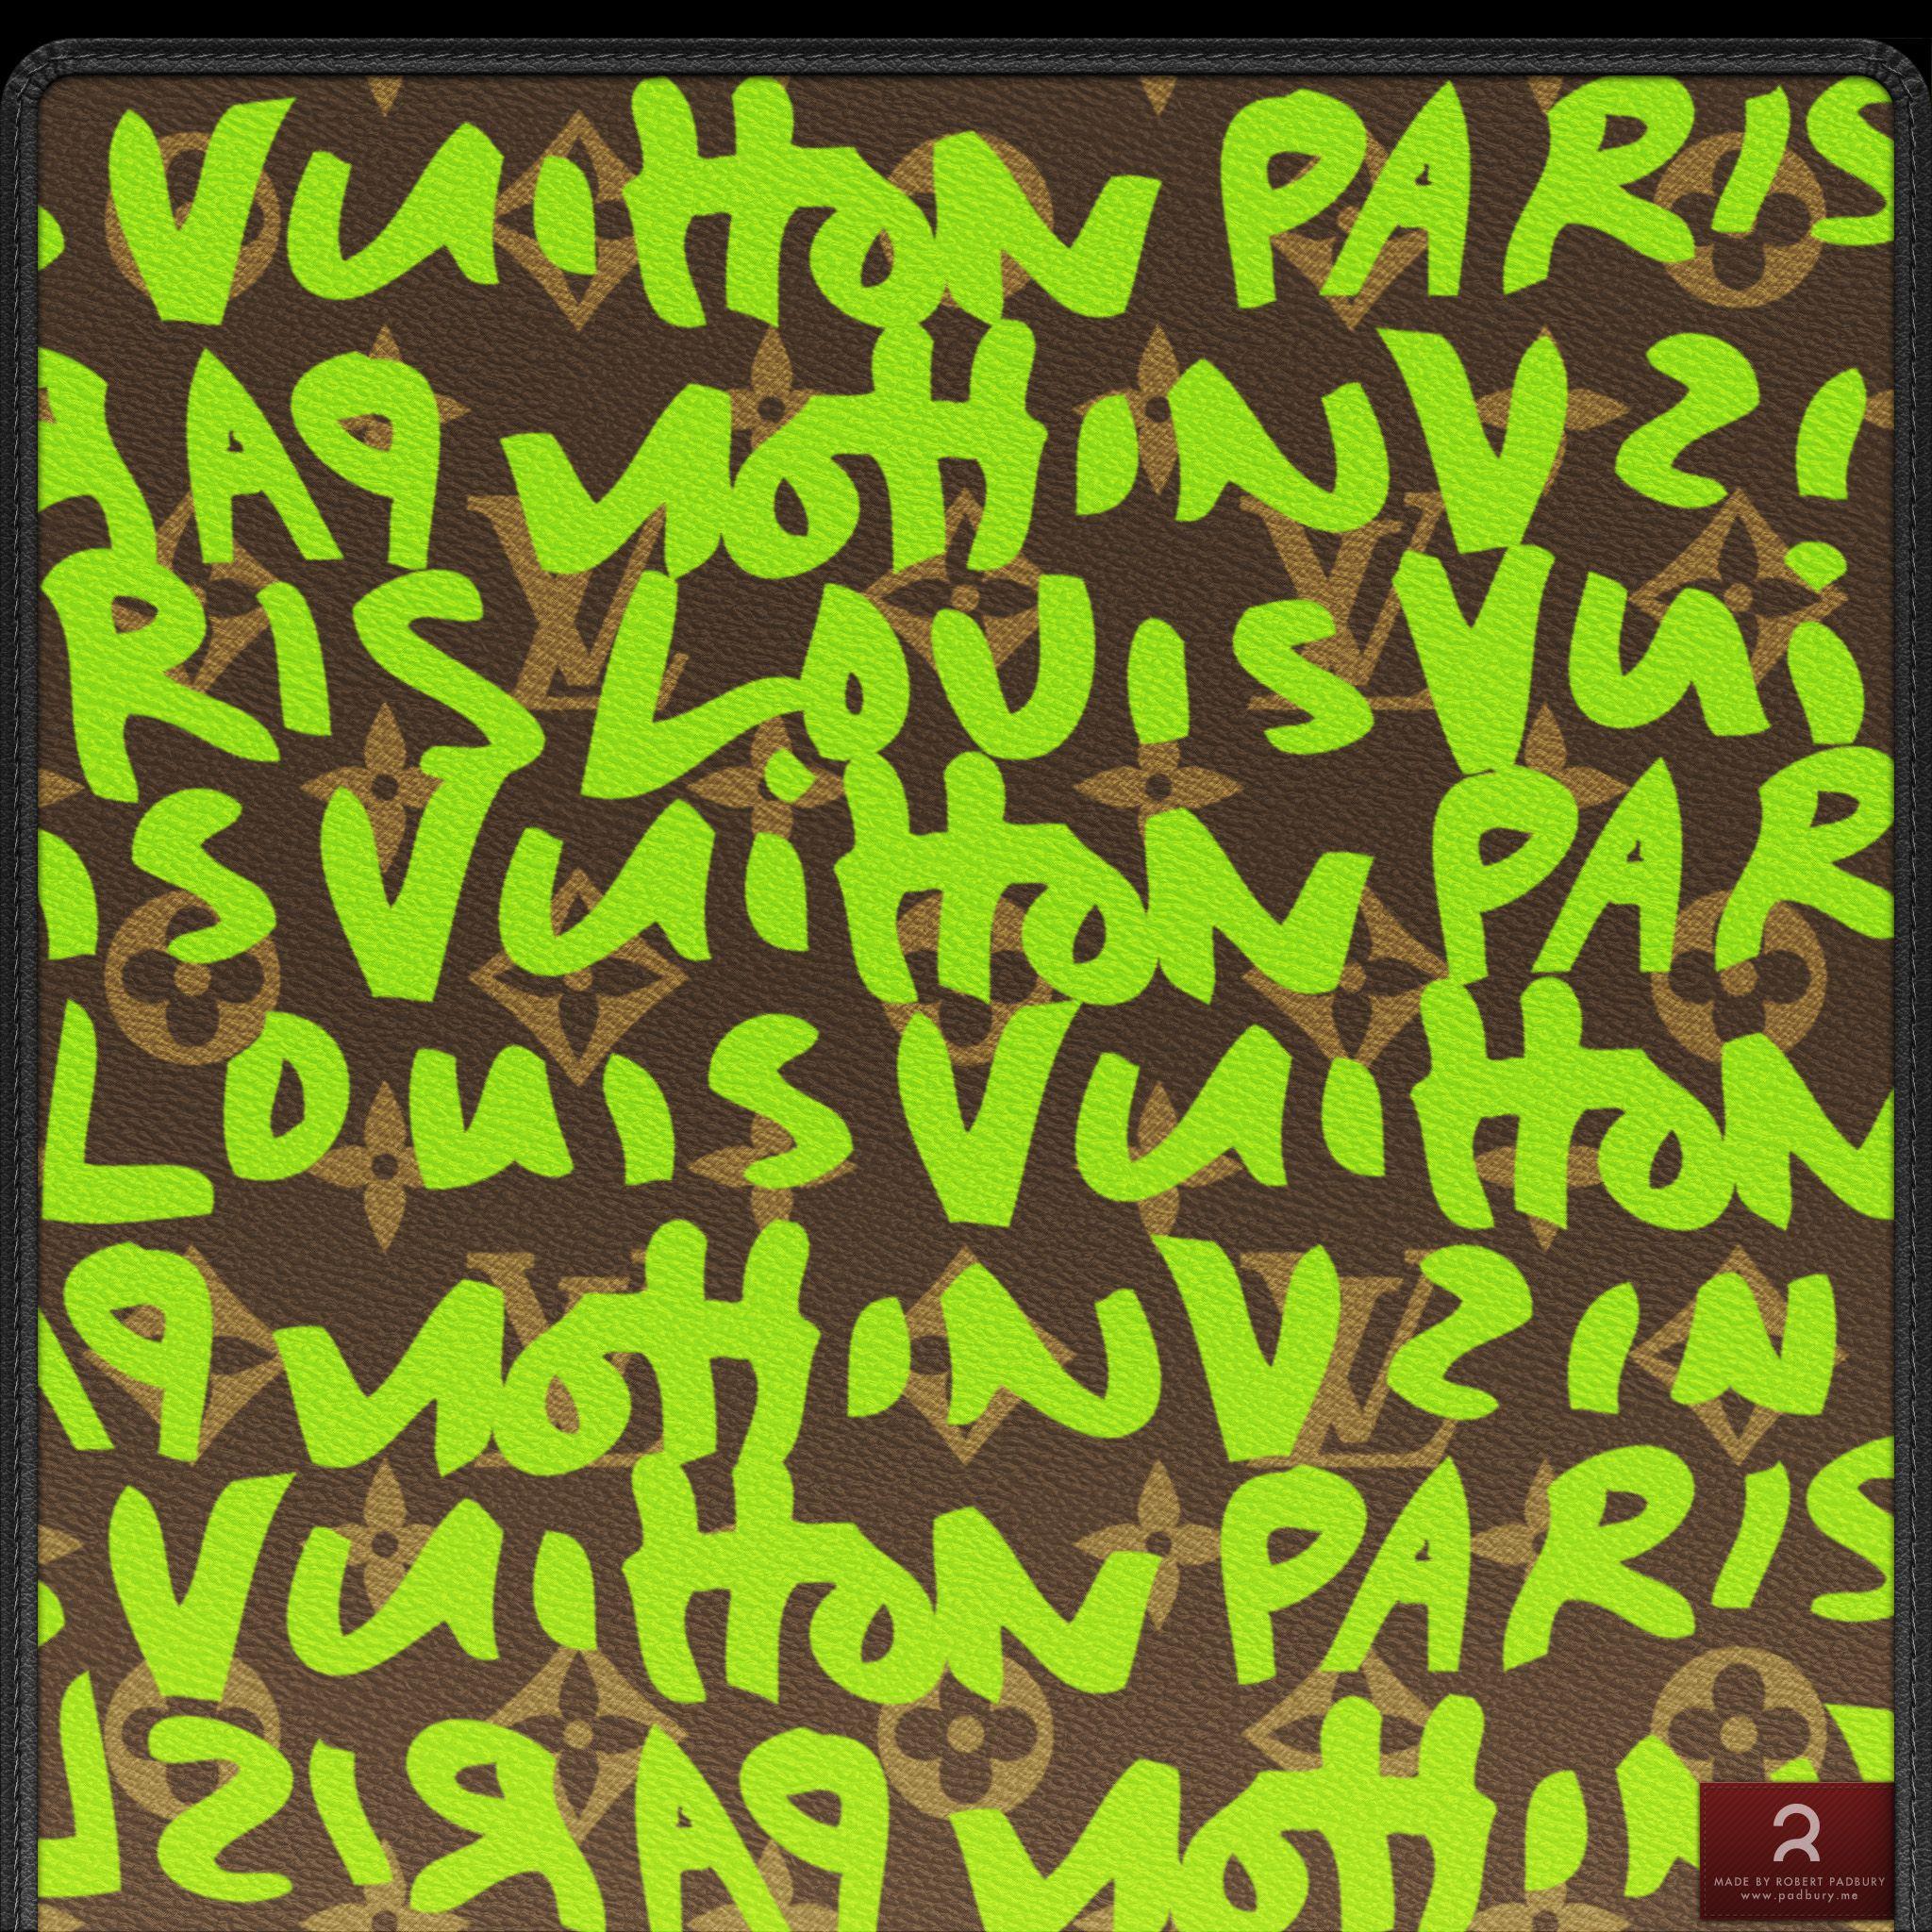 Gaston-Louis Vuitton Wallpaper & PSD by Robert Padbury on Dribbble